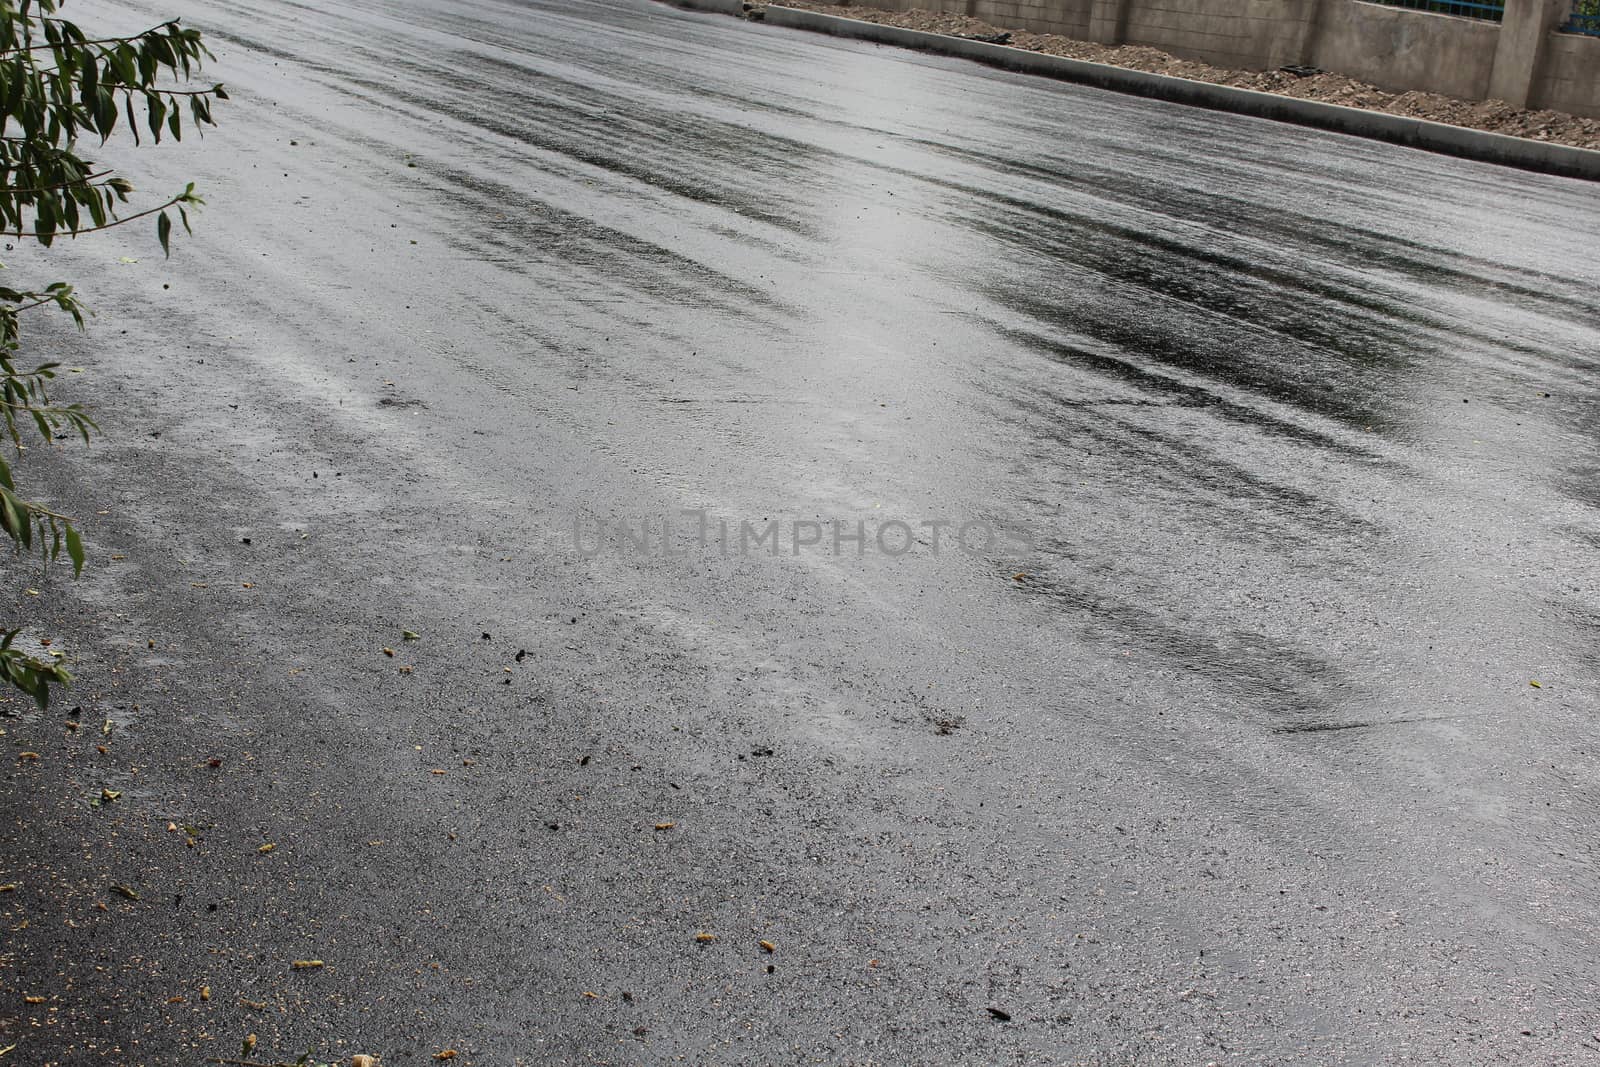 Freshly laid black tar asphalt pavement by nurjan100